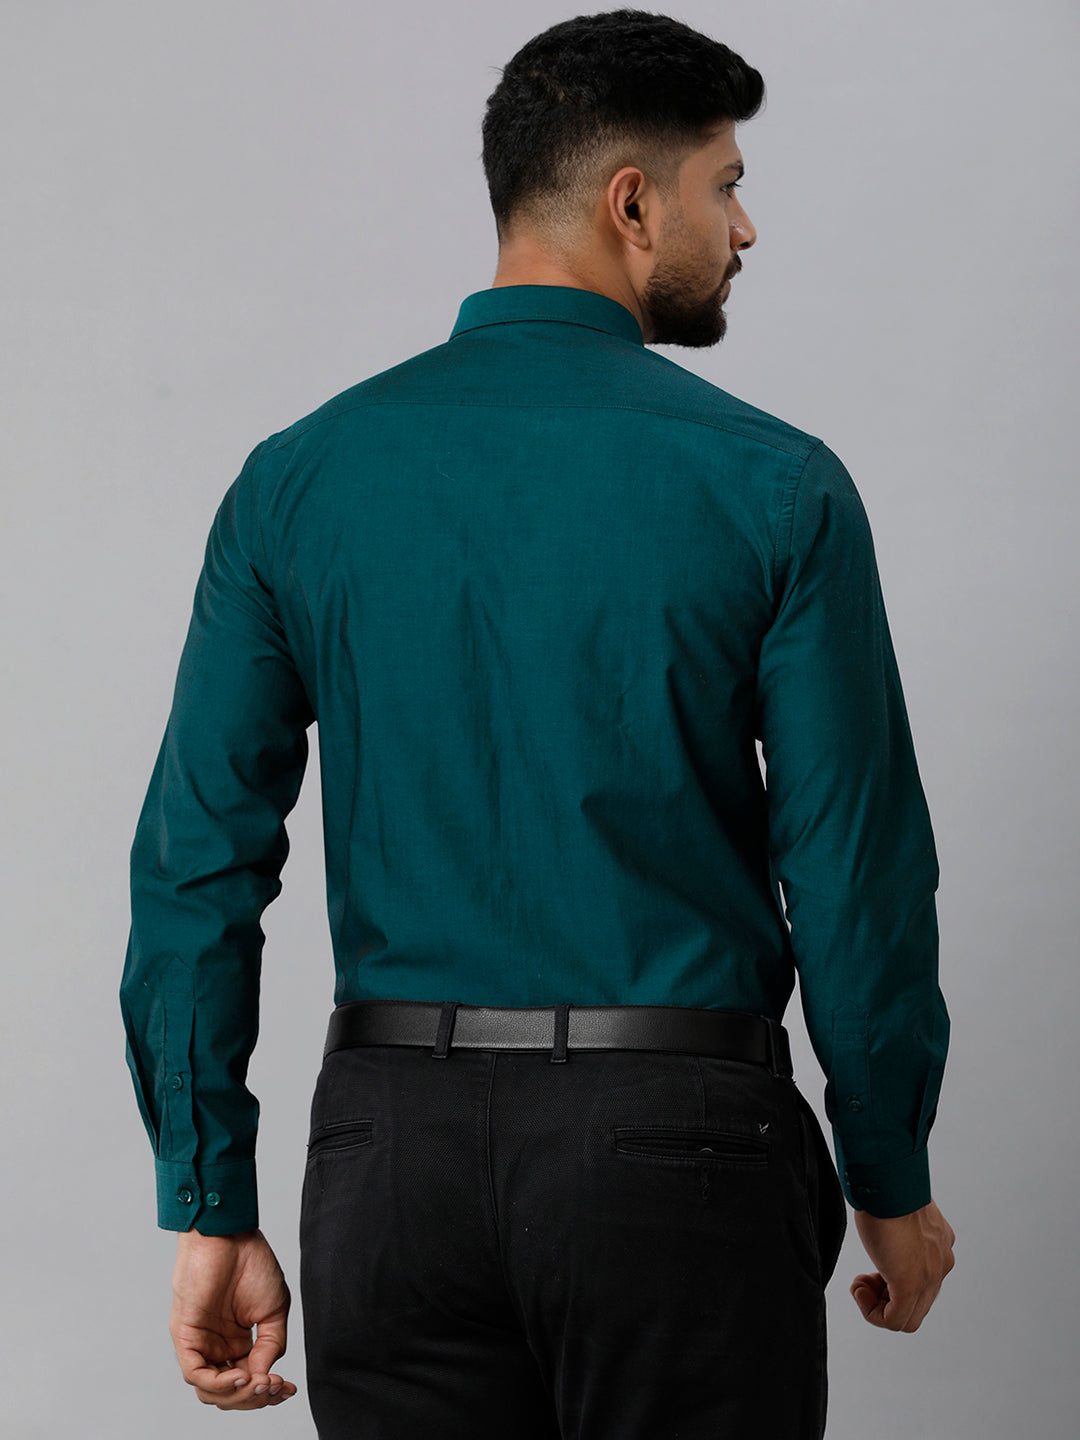 Mens Premium Cotton Formal Shirt Full Sleeves Dark Green MH G116-Back view